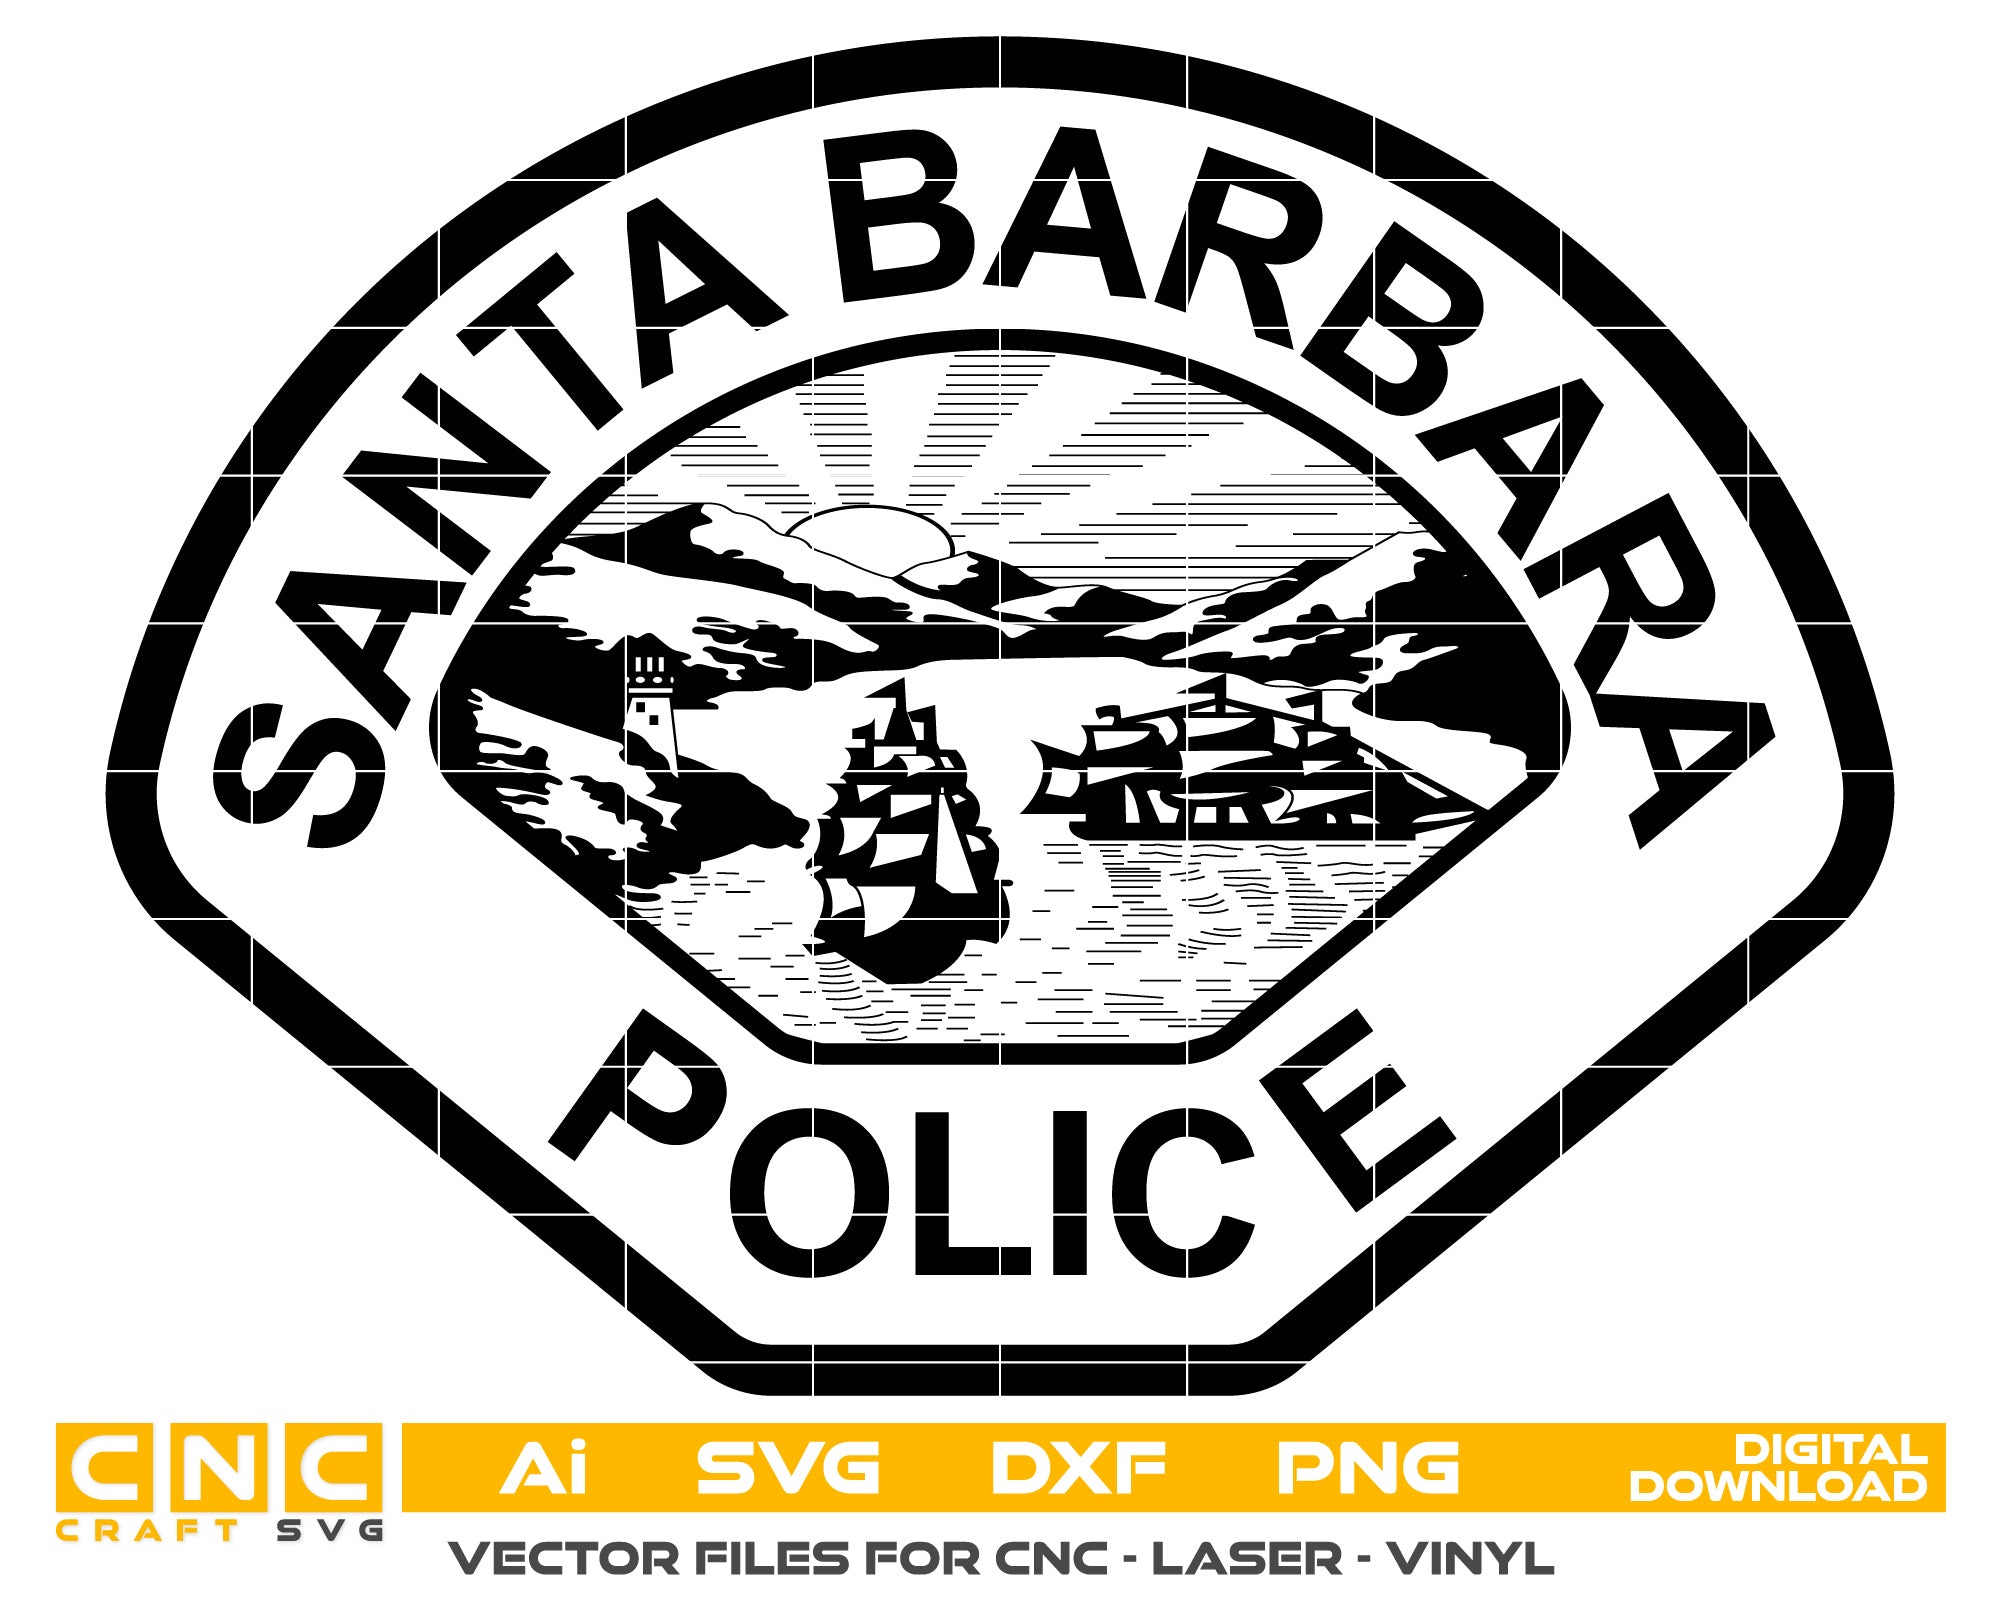 Santa Barbara Police Badge vector art